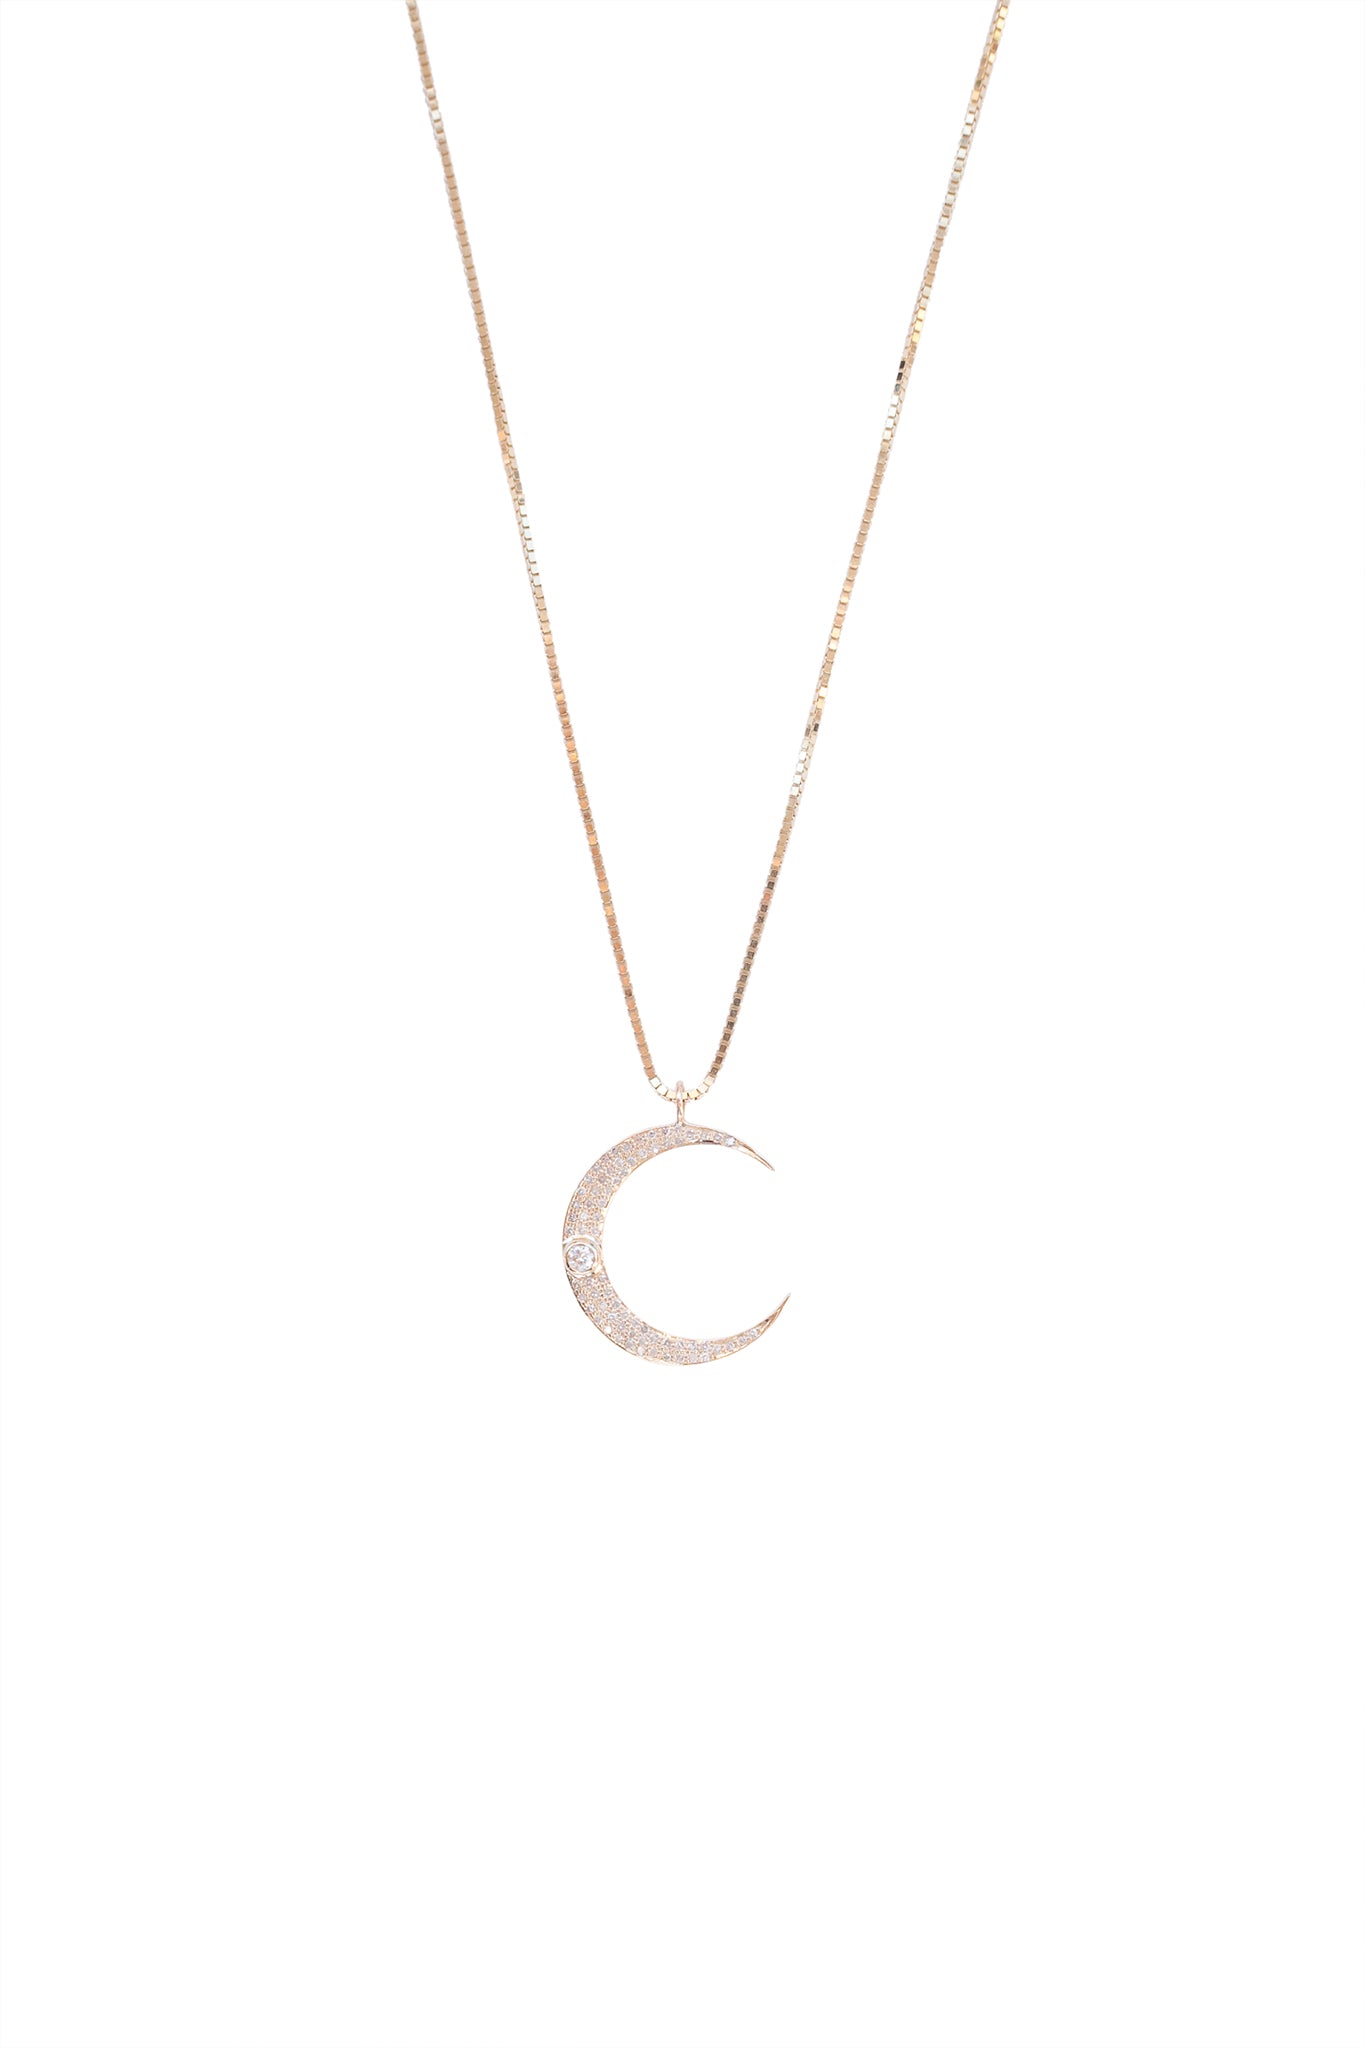 Heather Gardner Crescent Moon Diamond Necklace in Yellow Gold